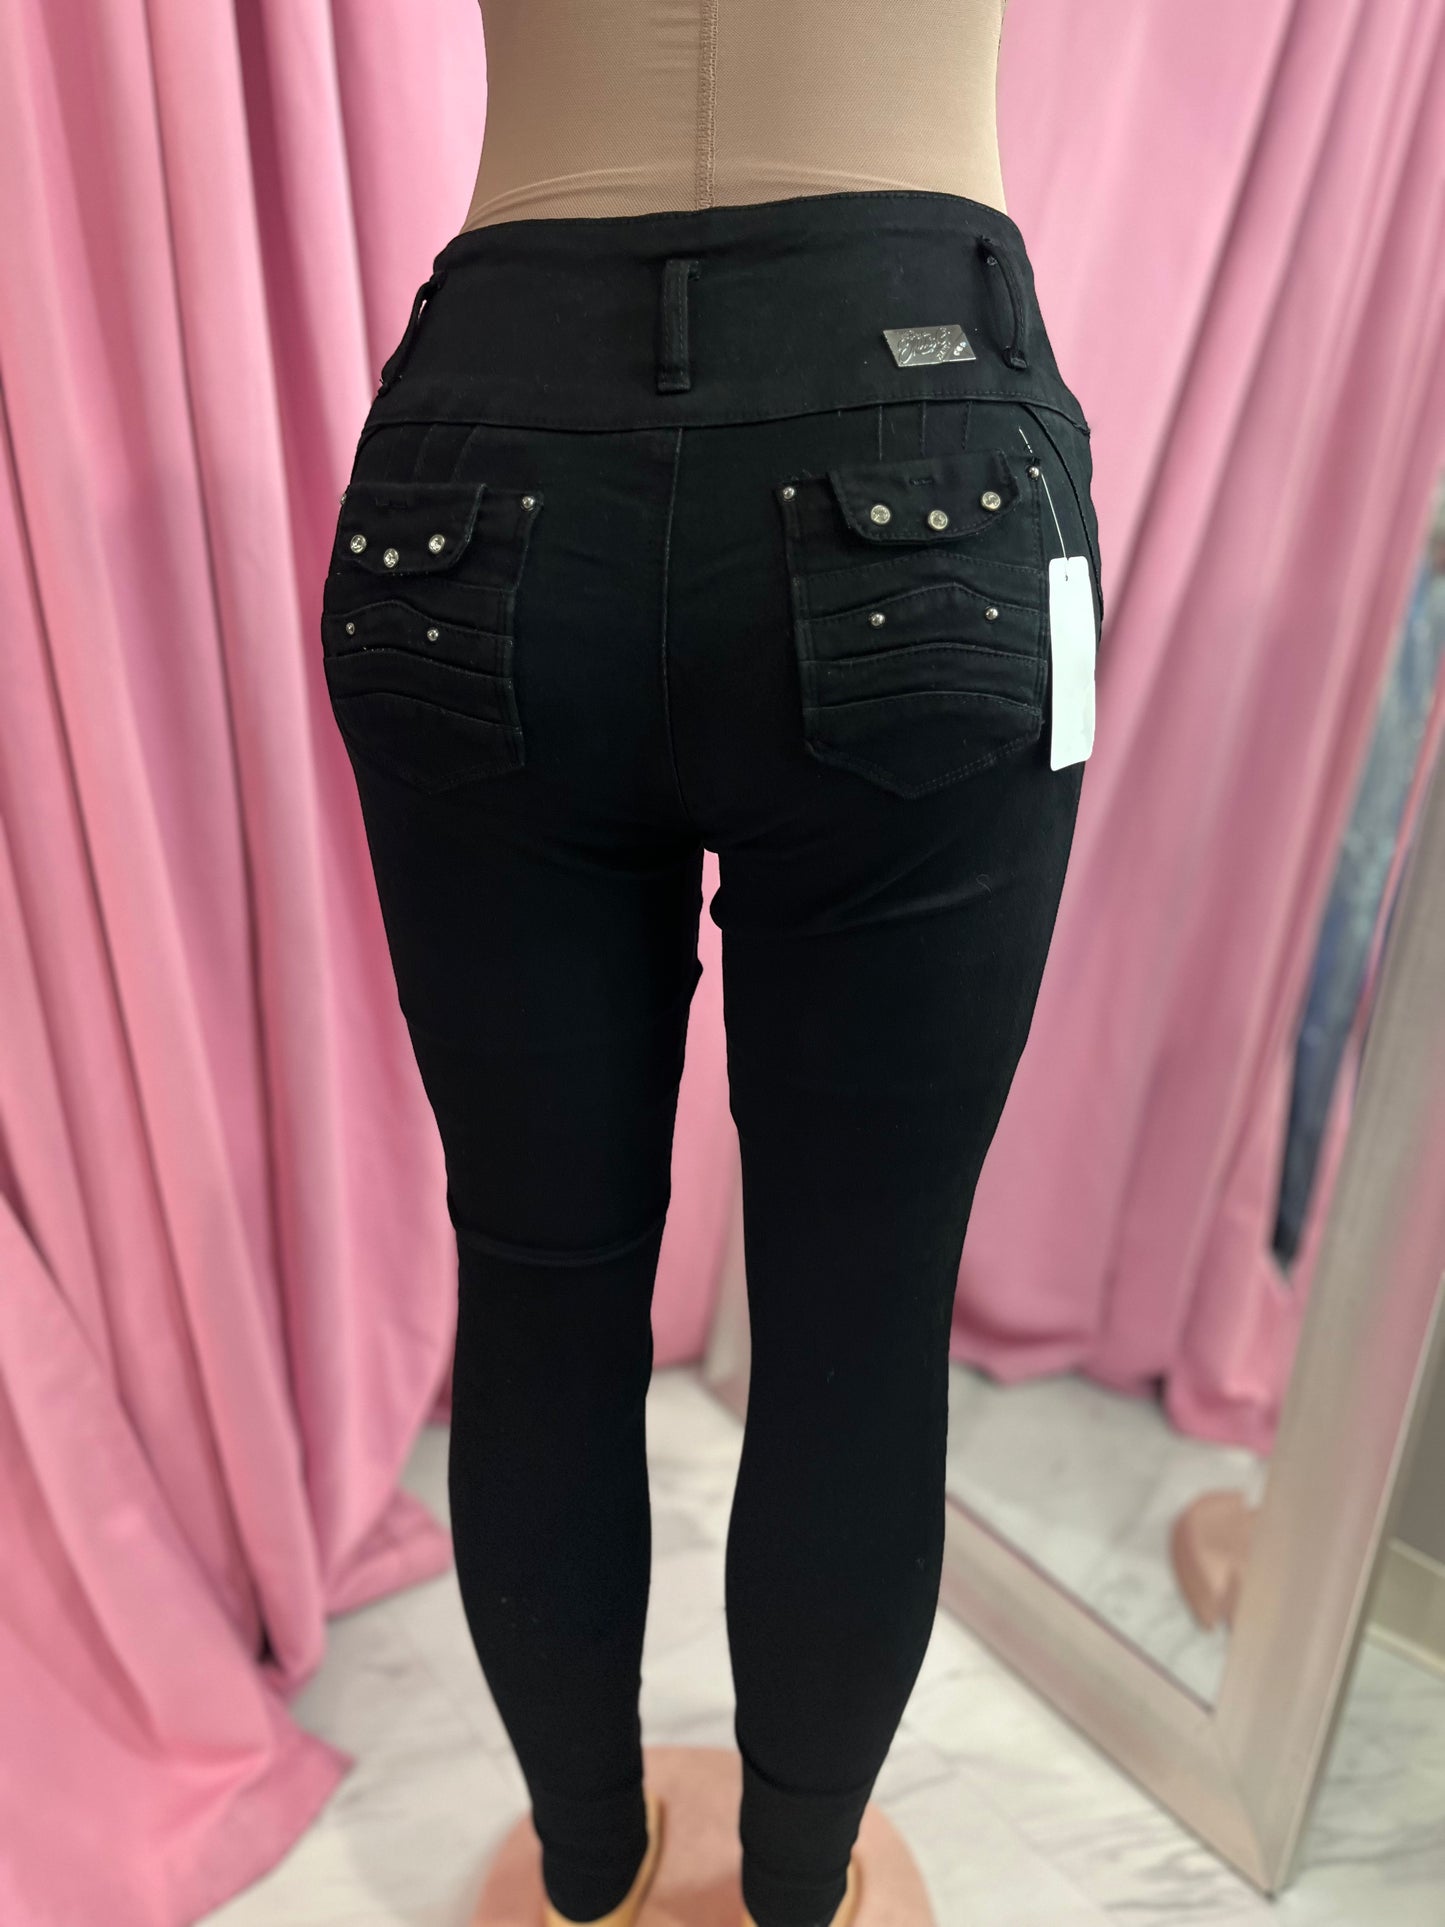 Colombian Jeans Bling Lavanta pompi pantalon color Negro